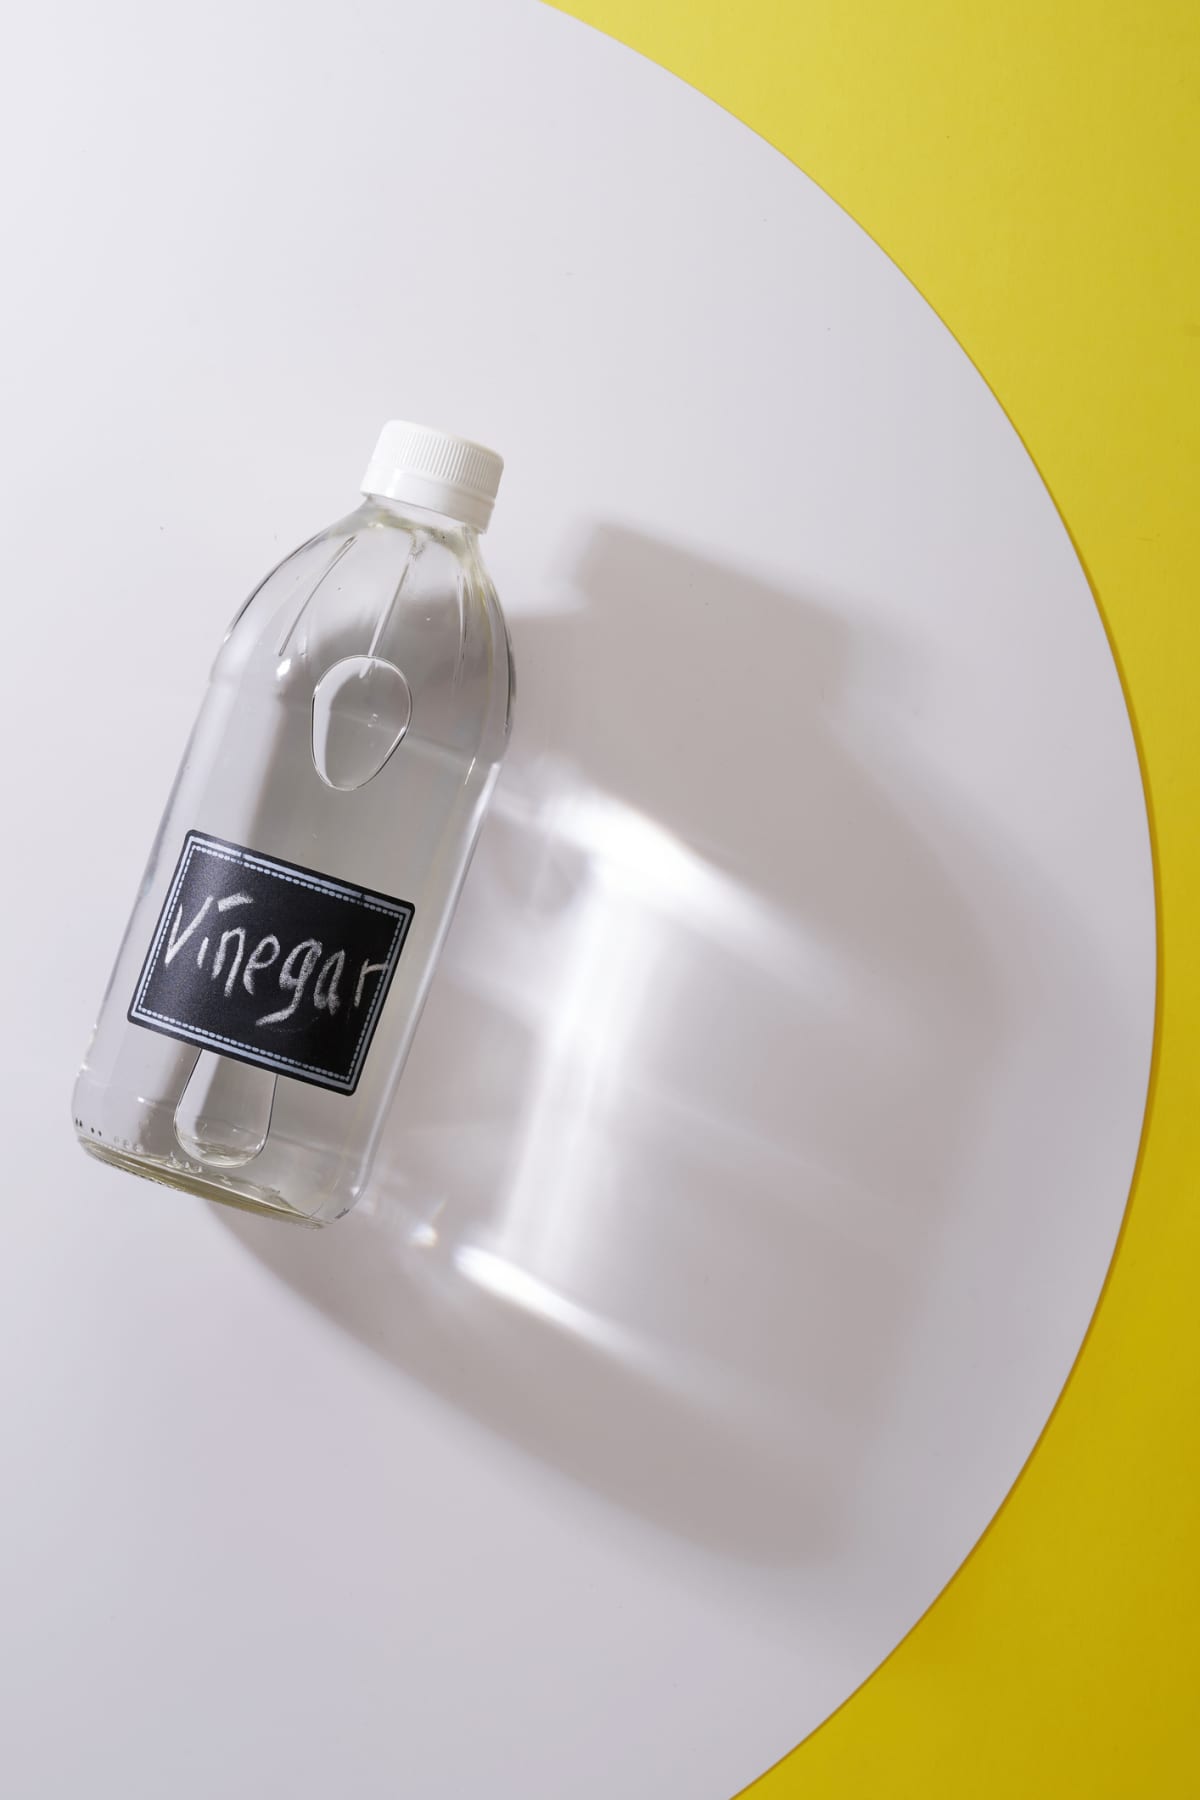 A bottle of vinegar